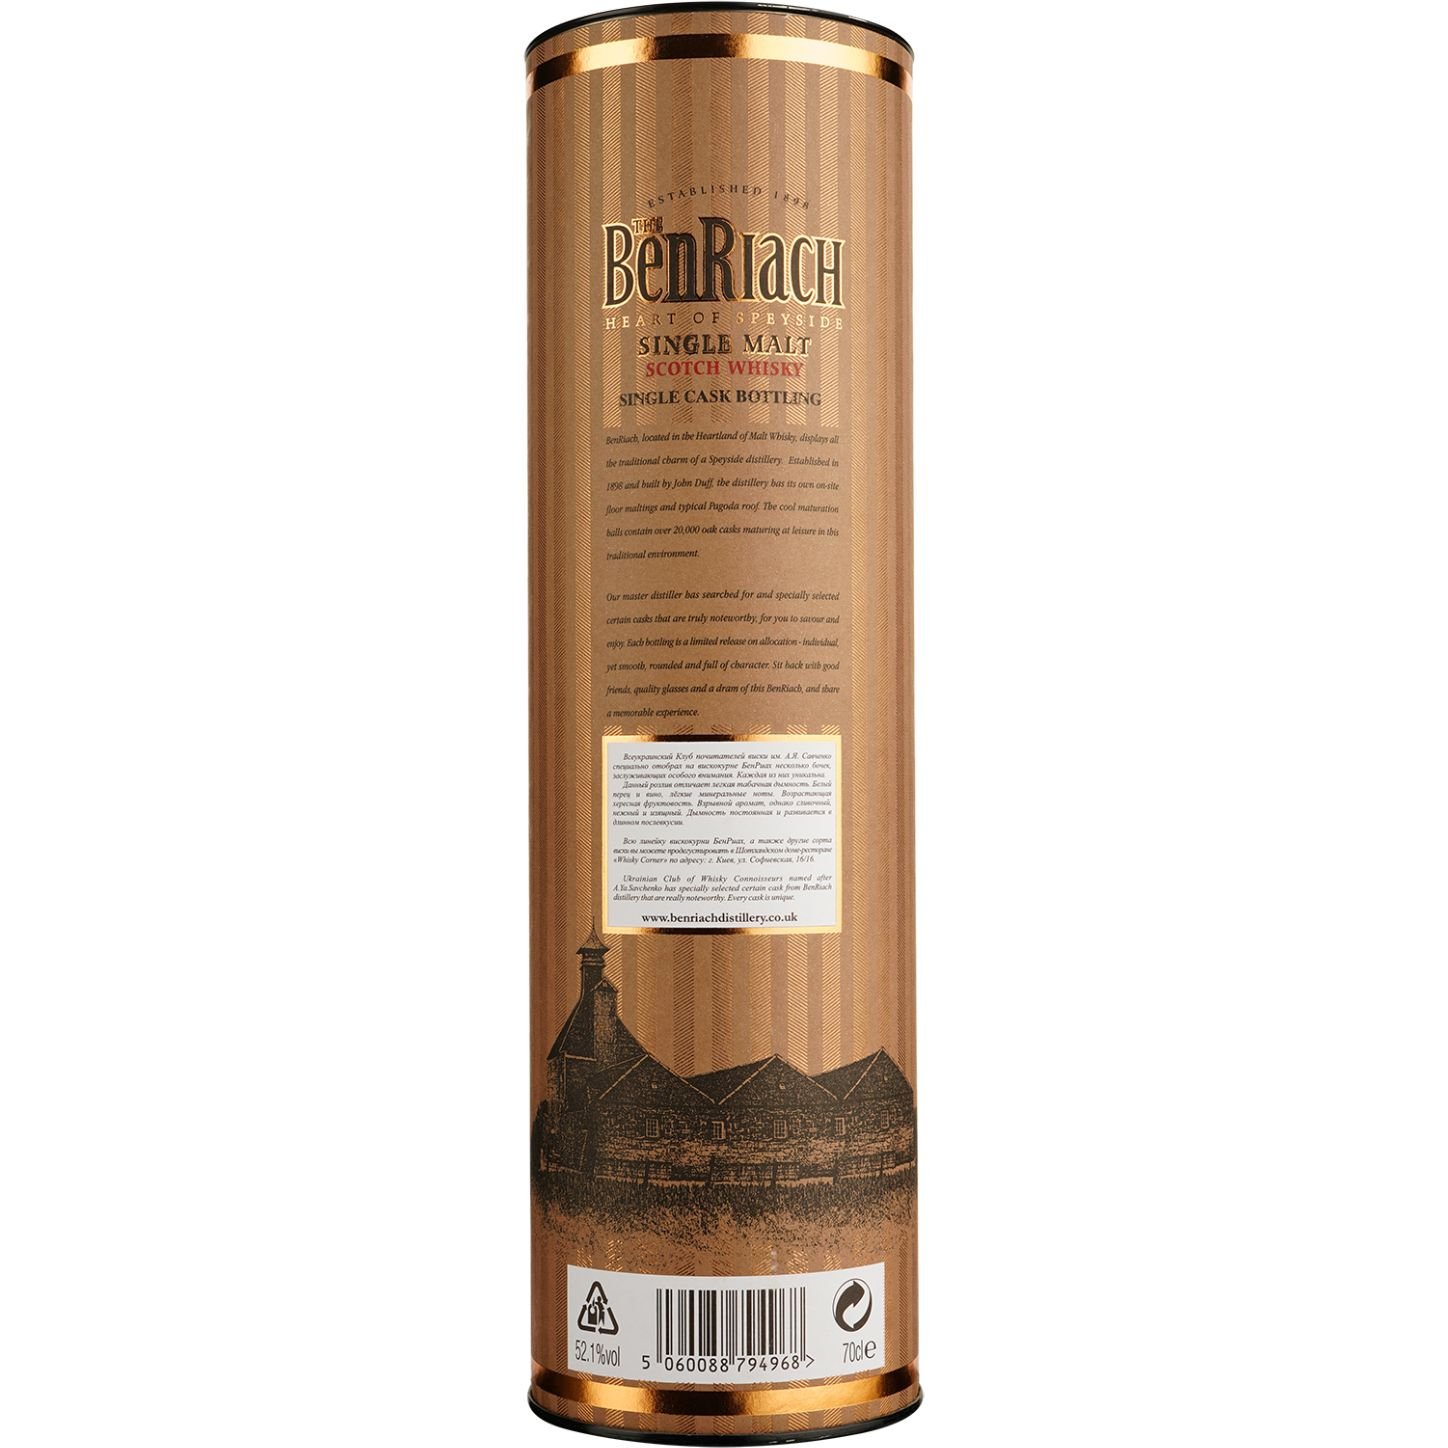 Віскі BenRiach 18 Years Old Rum Barrel Cask 1644 Single Malt Scotch Whisky, у подарунковій упаковці, 57,6%, 0,7 л - фото 5